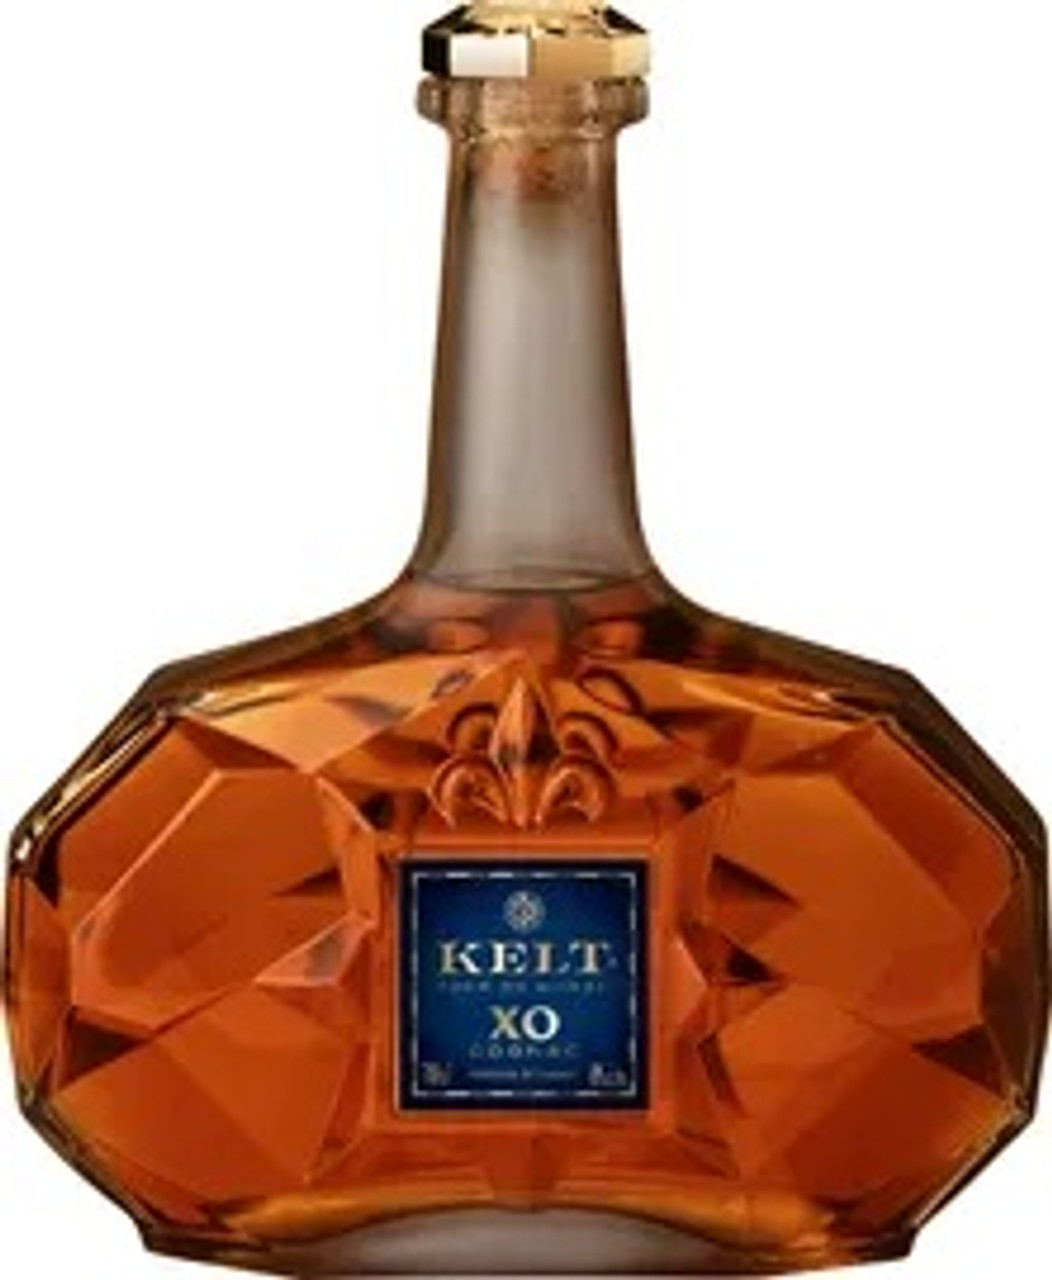 Kelt Tour du Monde Commodore Grande Champagne Cognac 750ml - MoreWines